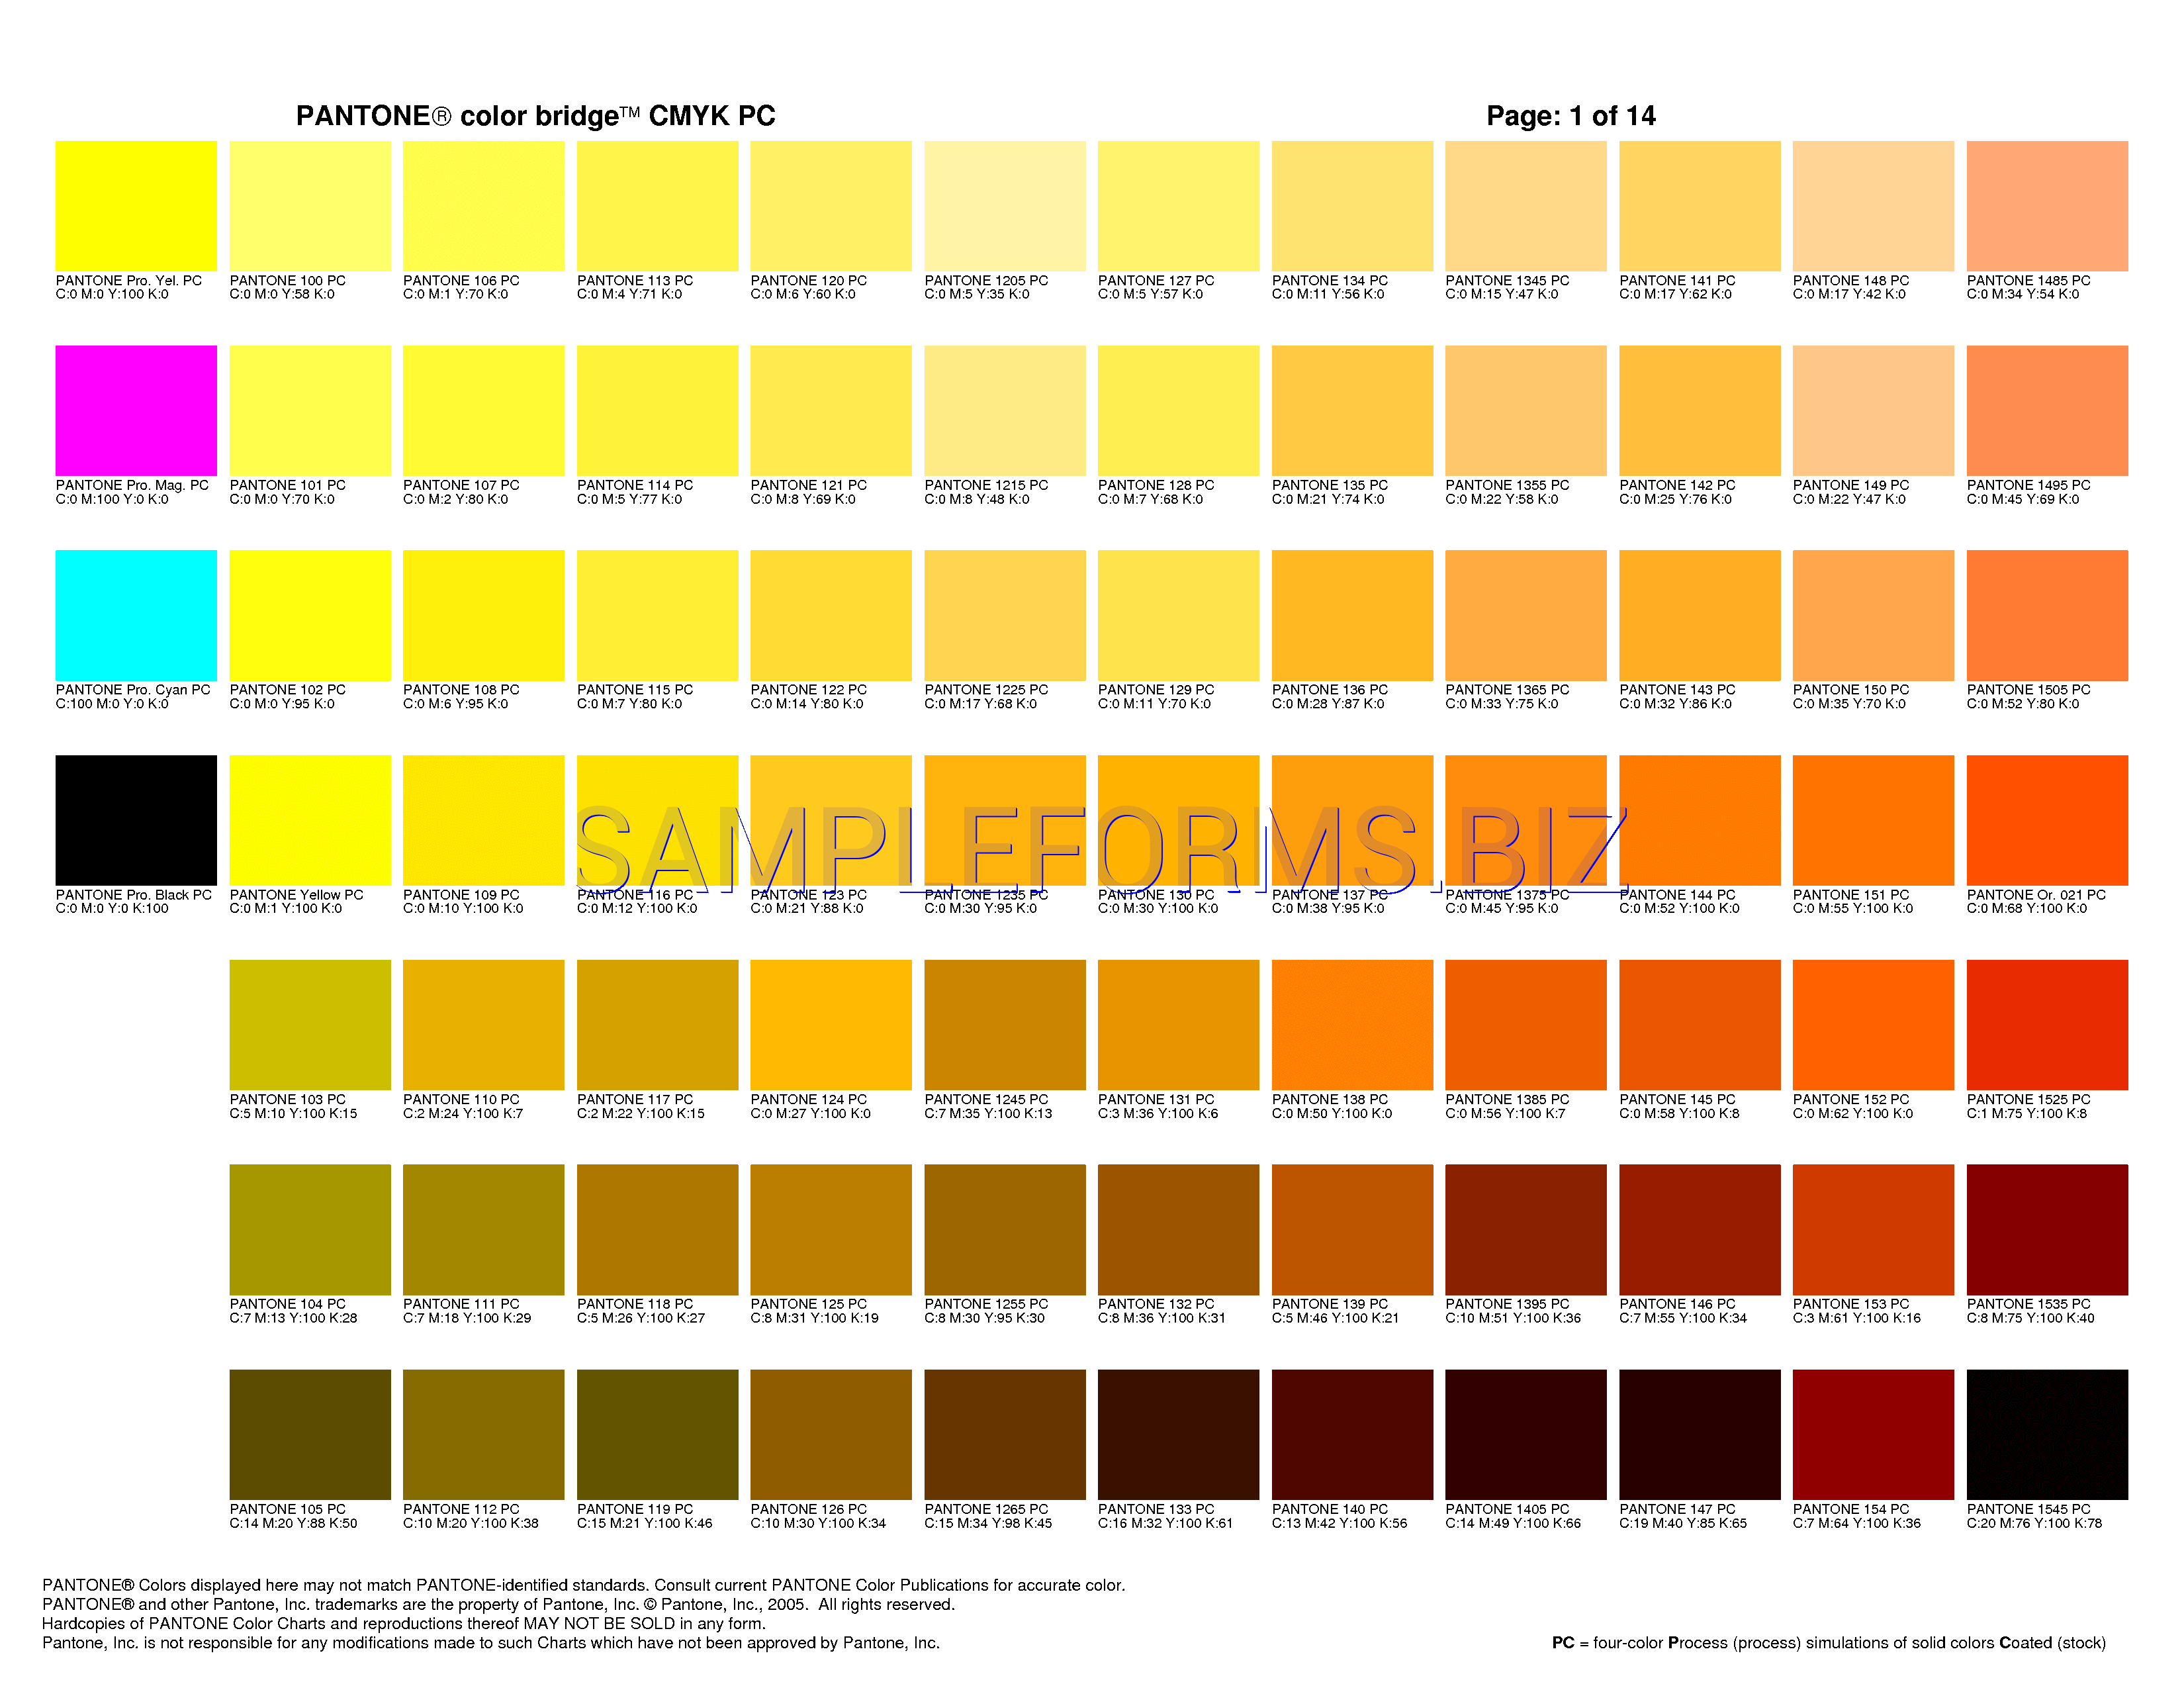 Cmyk Color Chart Pdf Free Download